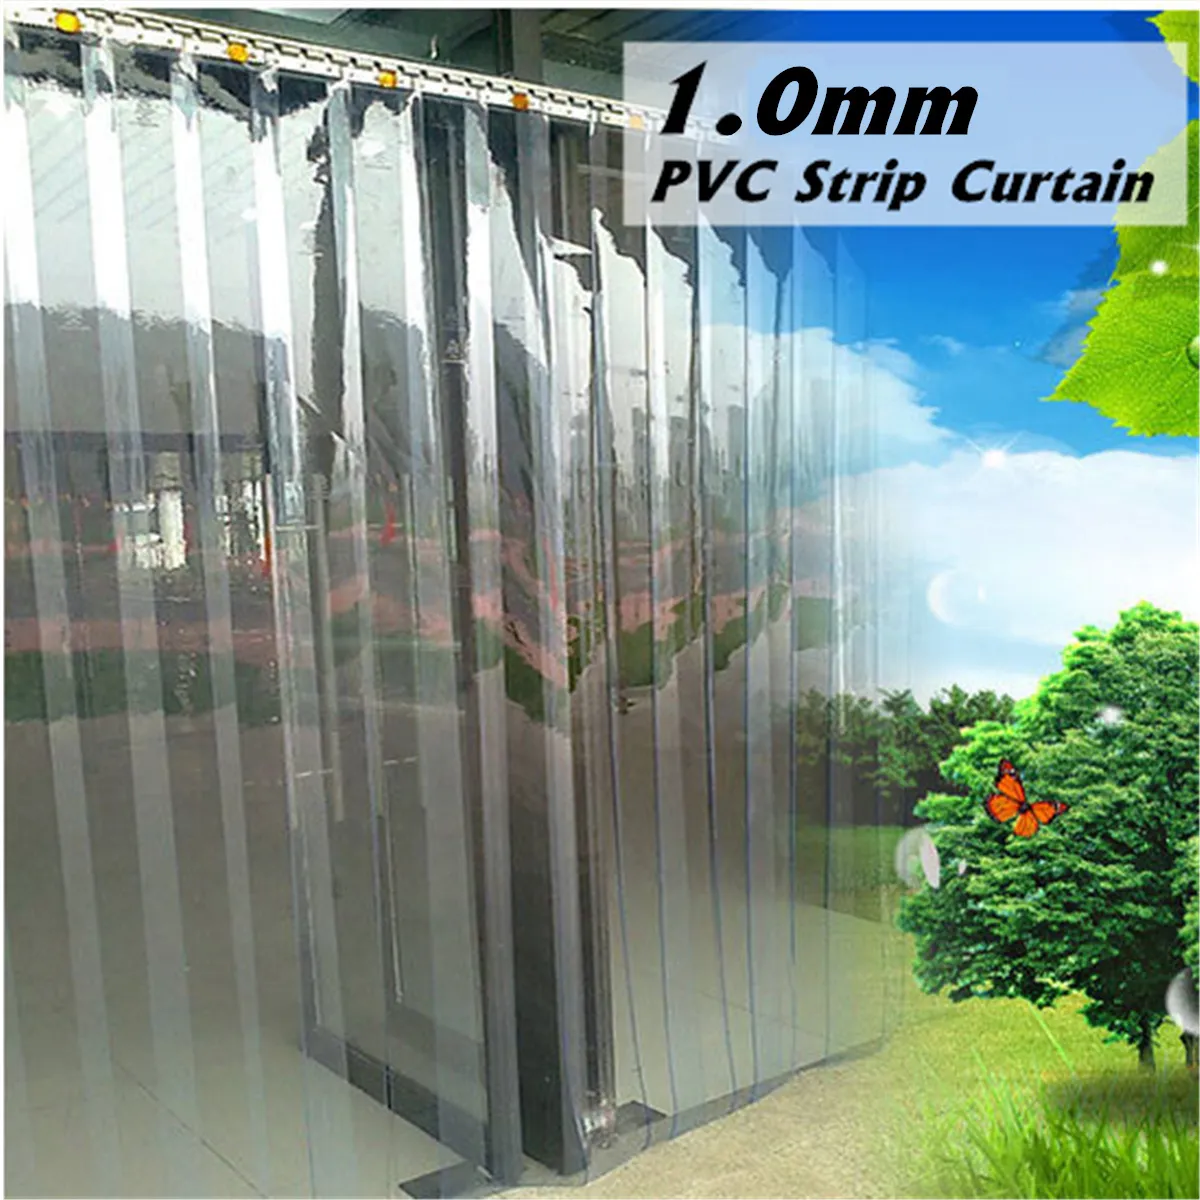 Kit de cortina de tiras de PVC, 0.079 in de grosor, impermeable,  transparente, resistente a los arañazos, fácil de pasar, para congelador